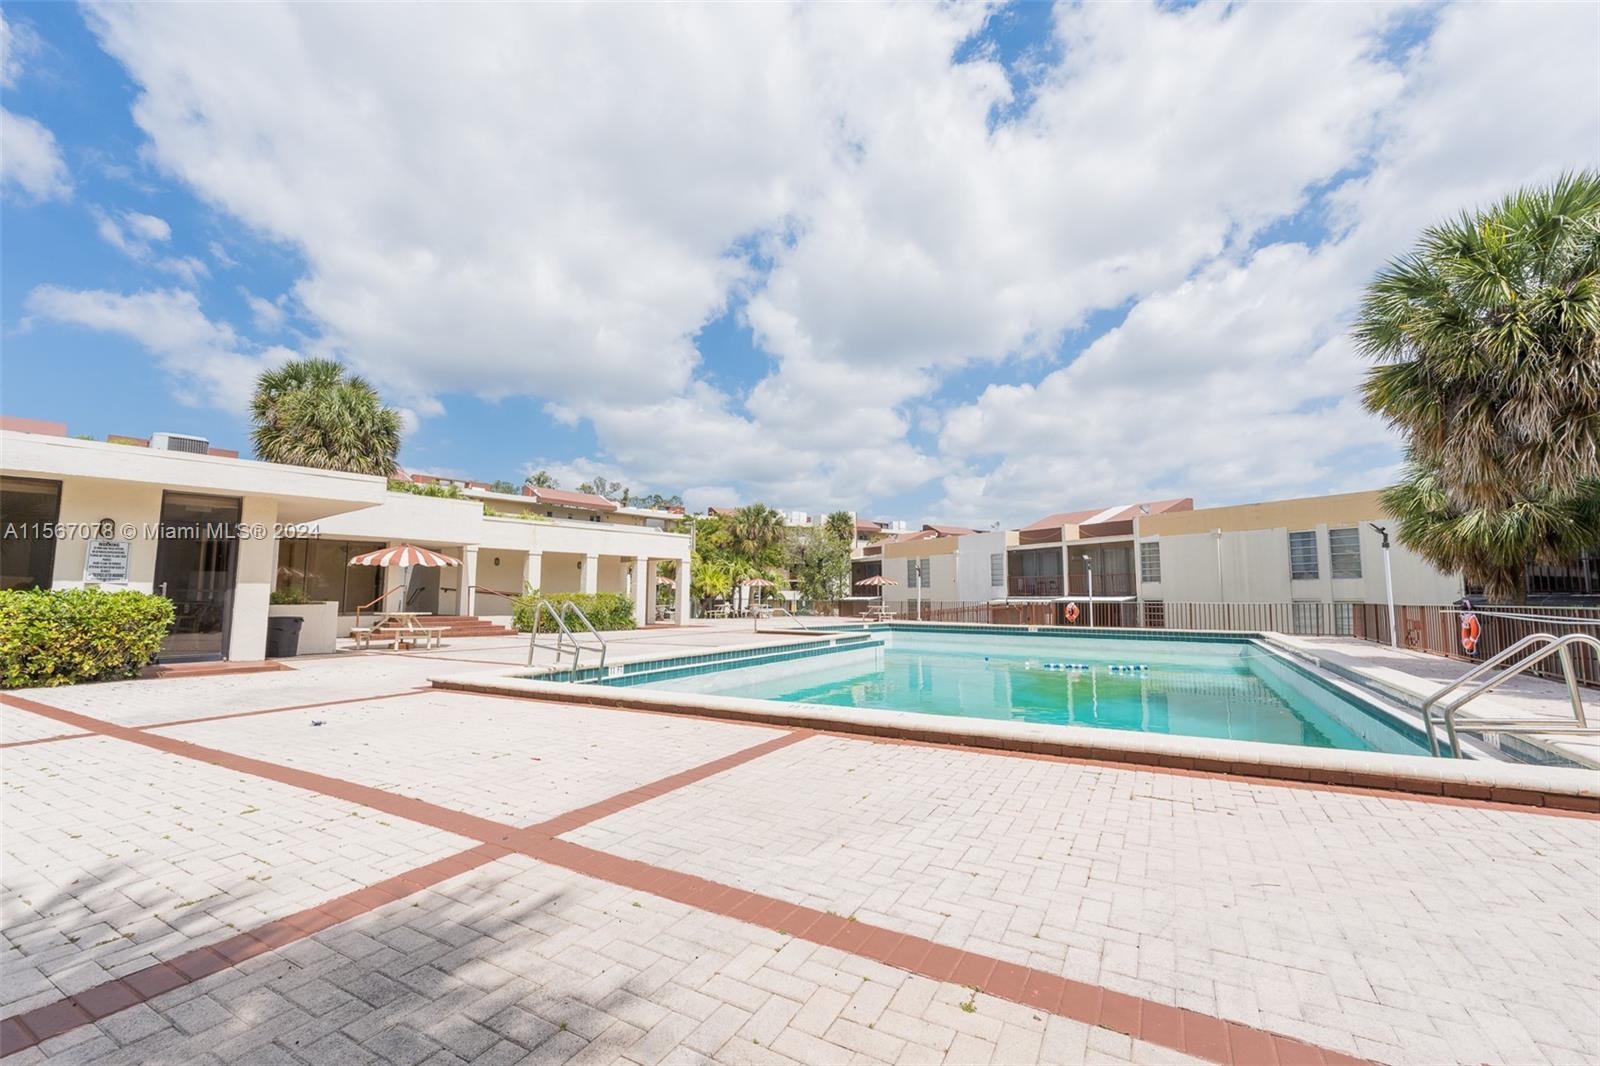 Rental Property at 8870 Fontainebleau Blvd 312, Miami, Broward County, Florida - Bedrooms: 2 
Bathrooms: 2  - $2,200 MO.